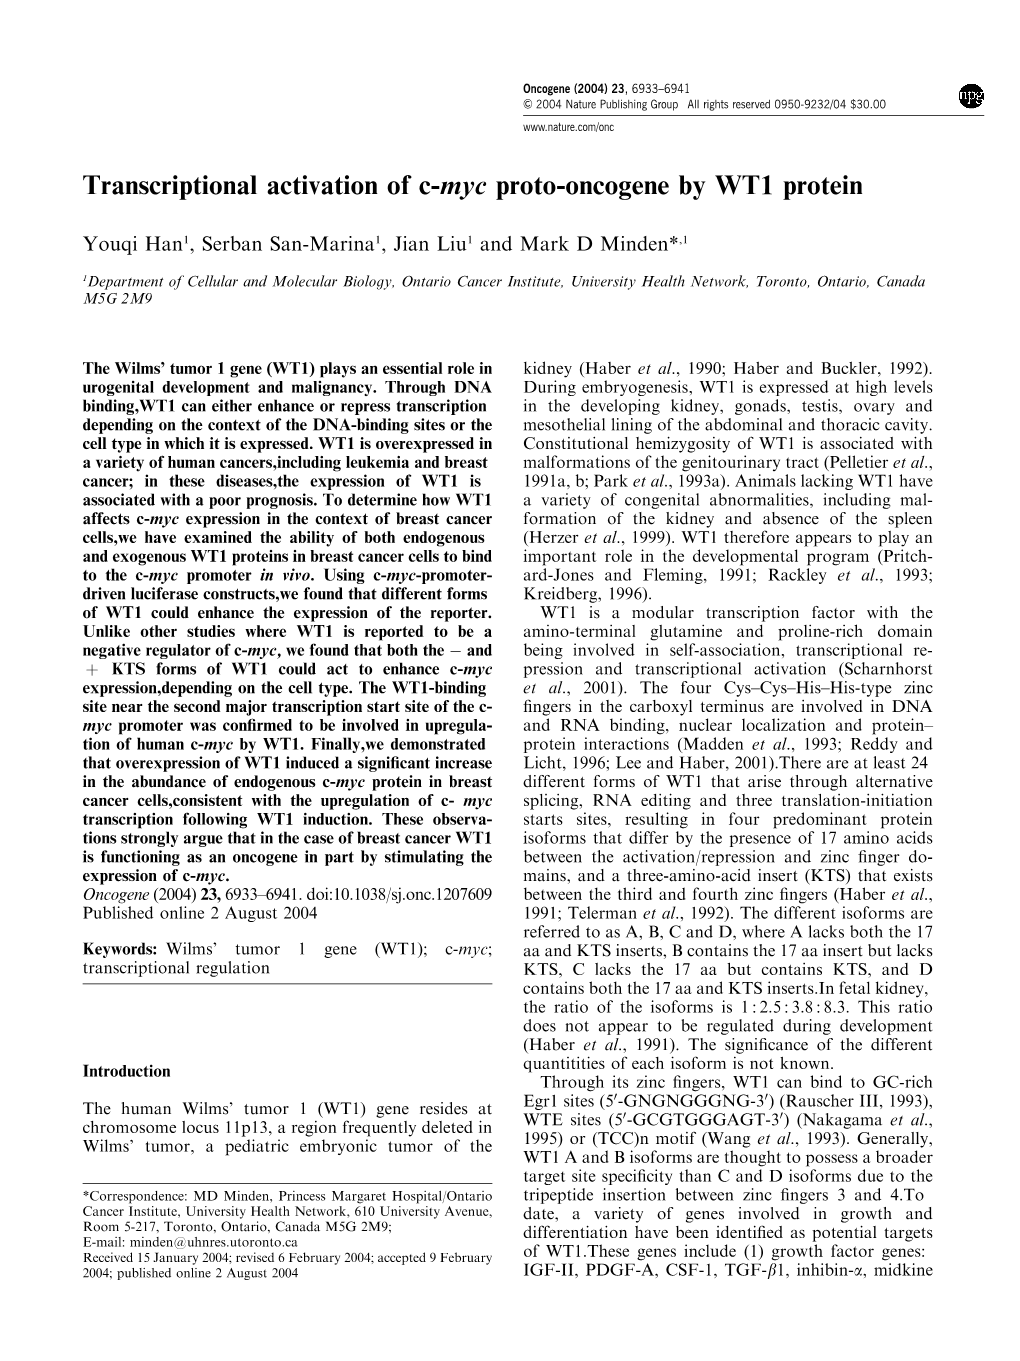 Transcriptional Activation of C-Myc Proto-Oncogene by WT1 Protein